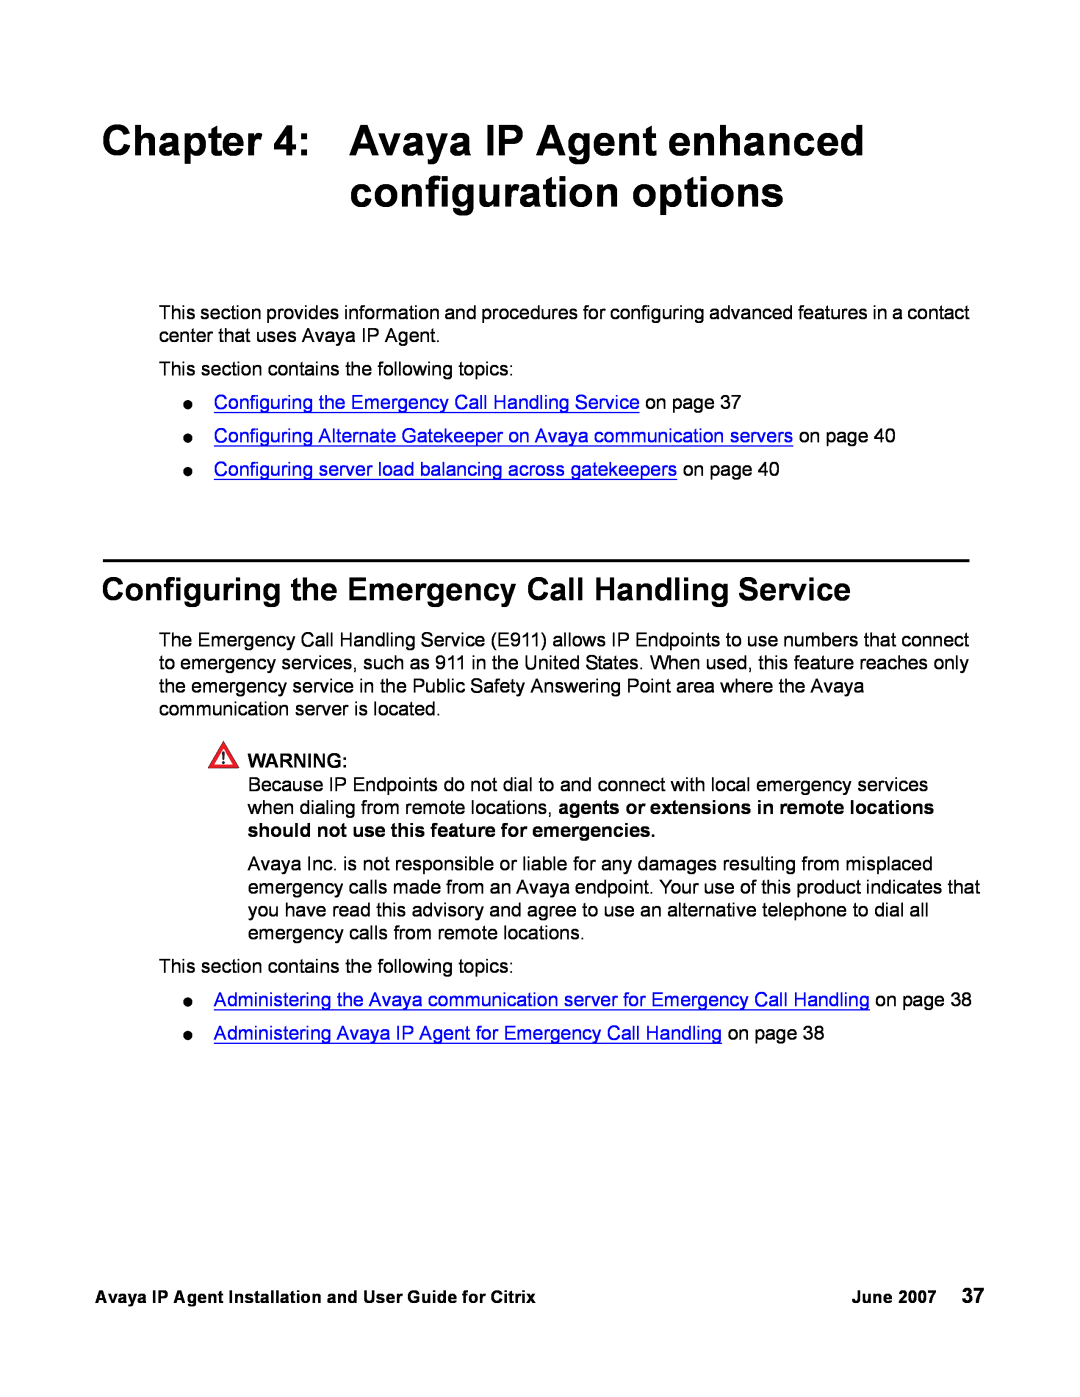 Avaya 7 manual Avaya IP Agent enhanced configuration options, Configuring the Emergency Call Handling Service 